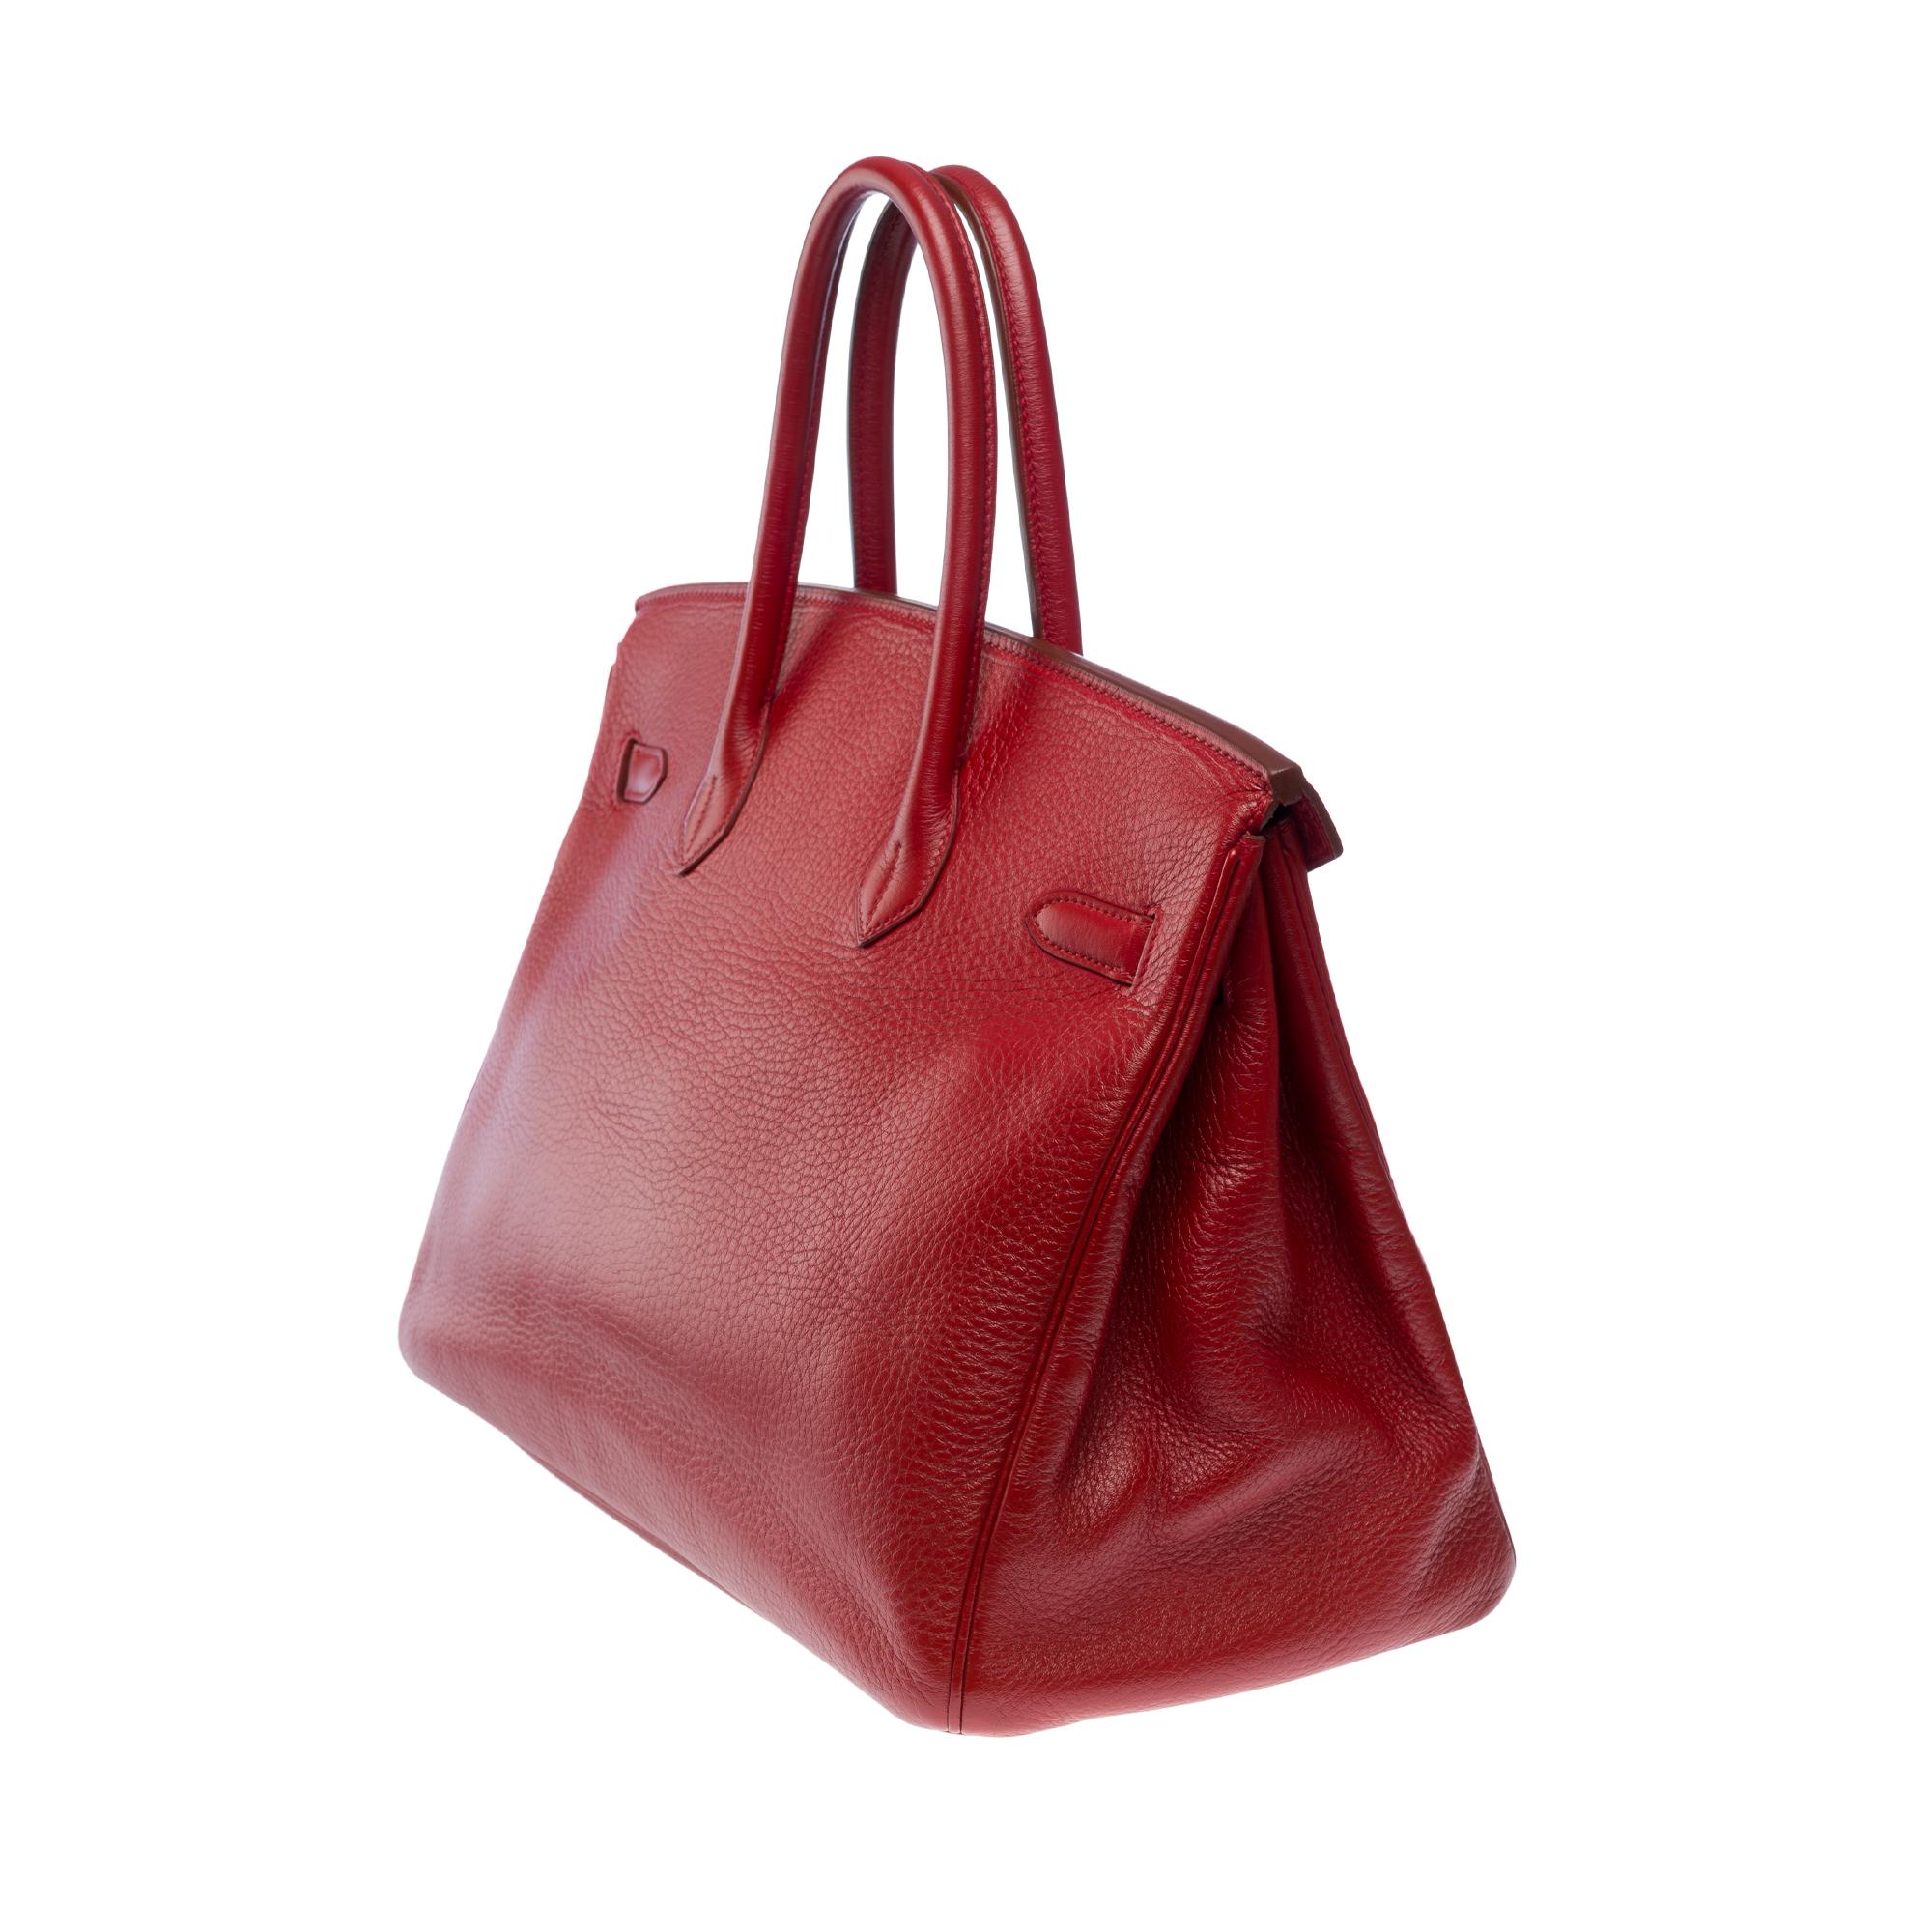 Women's or Men's Stunning Hermès Birkin 35 handbag in Rouge Garance Togo leather, GHW For Sale